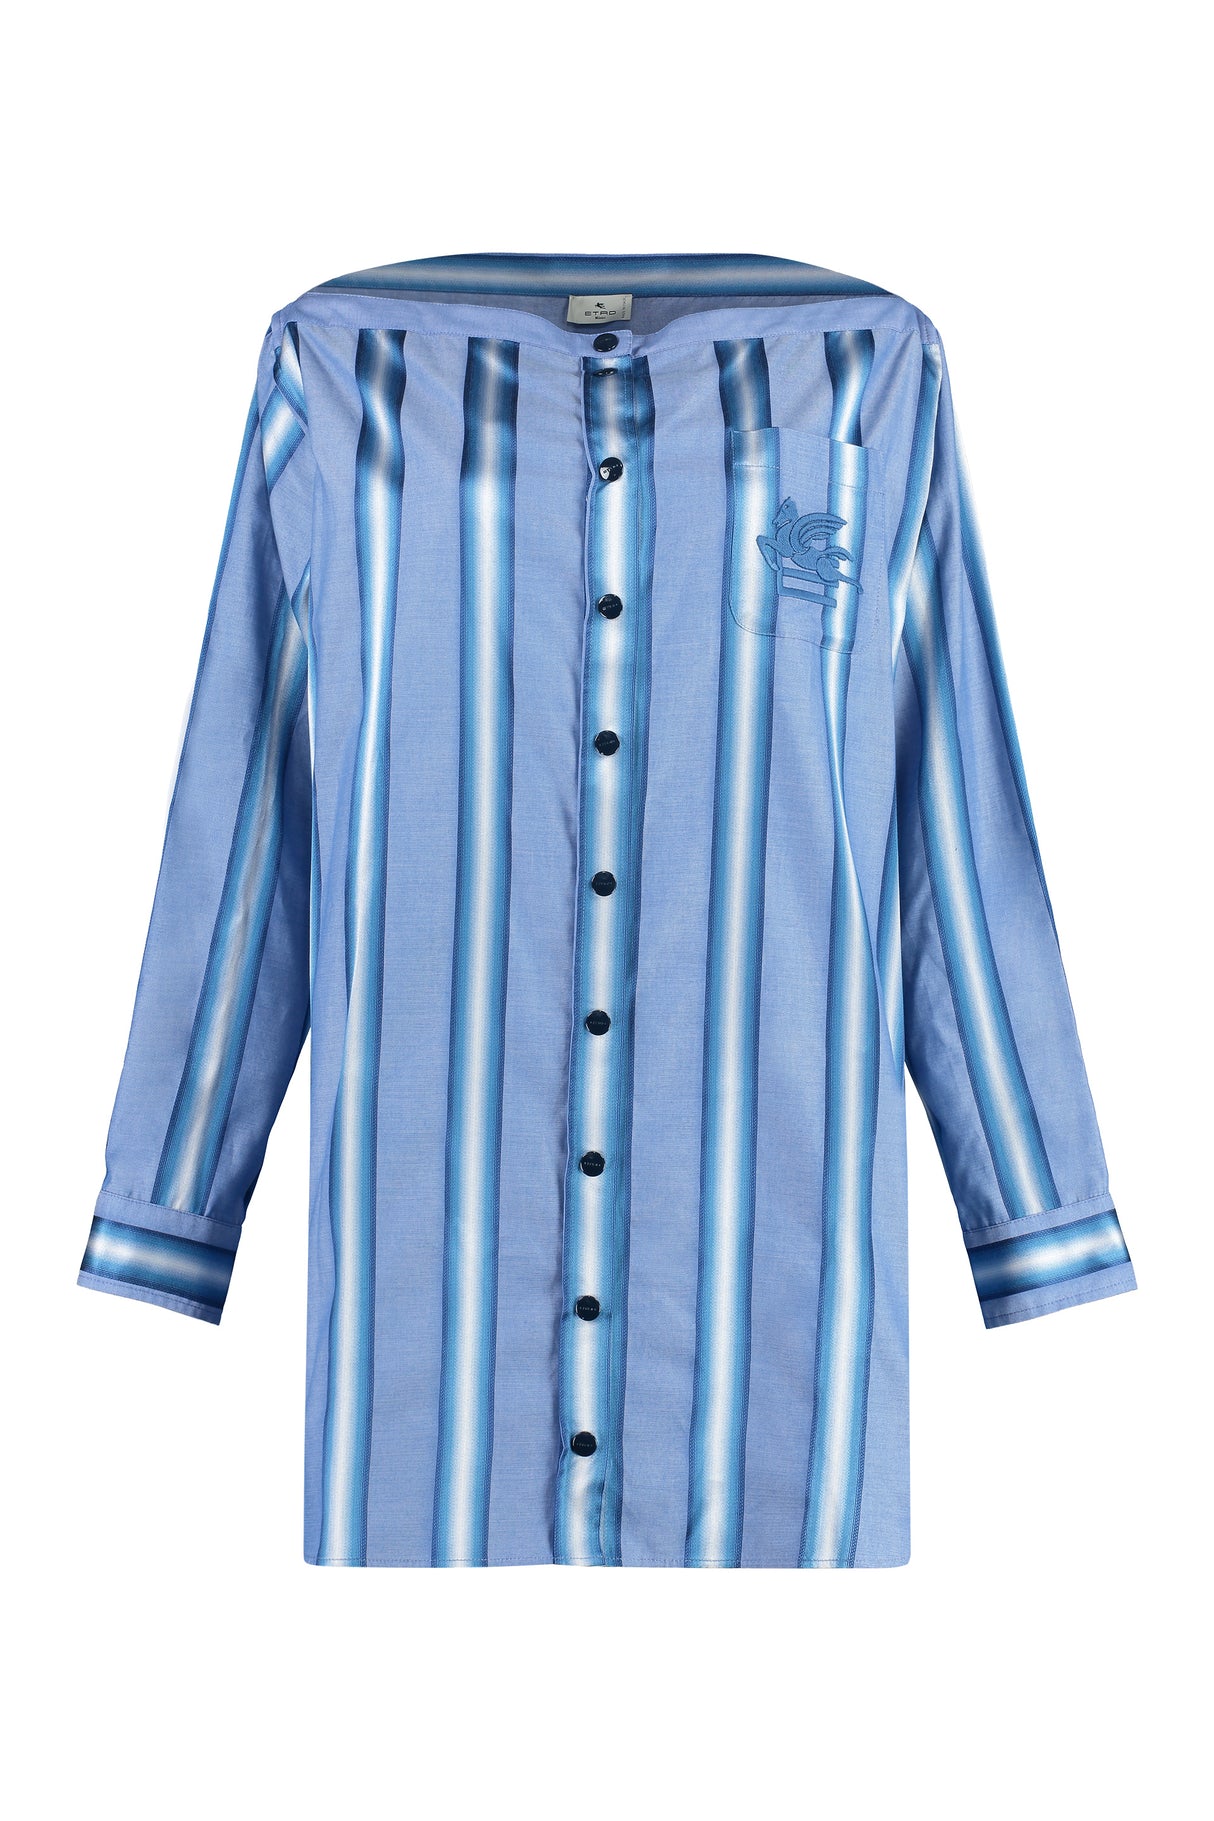 ETRO Blue Striped Off-Shoulder Mini Dress for Women